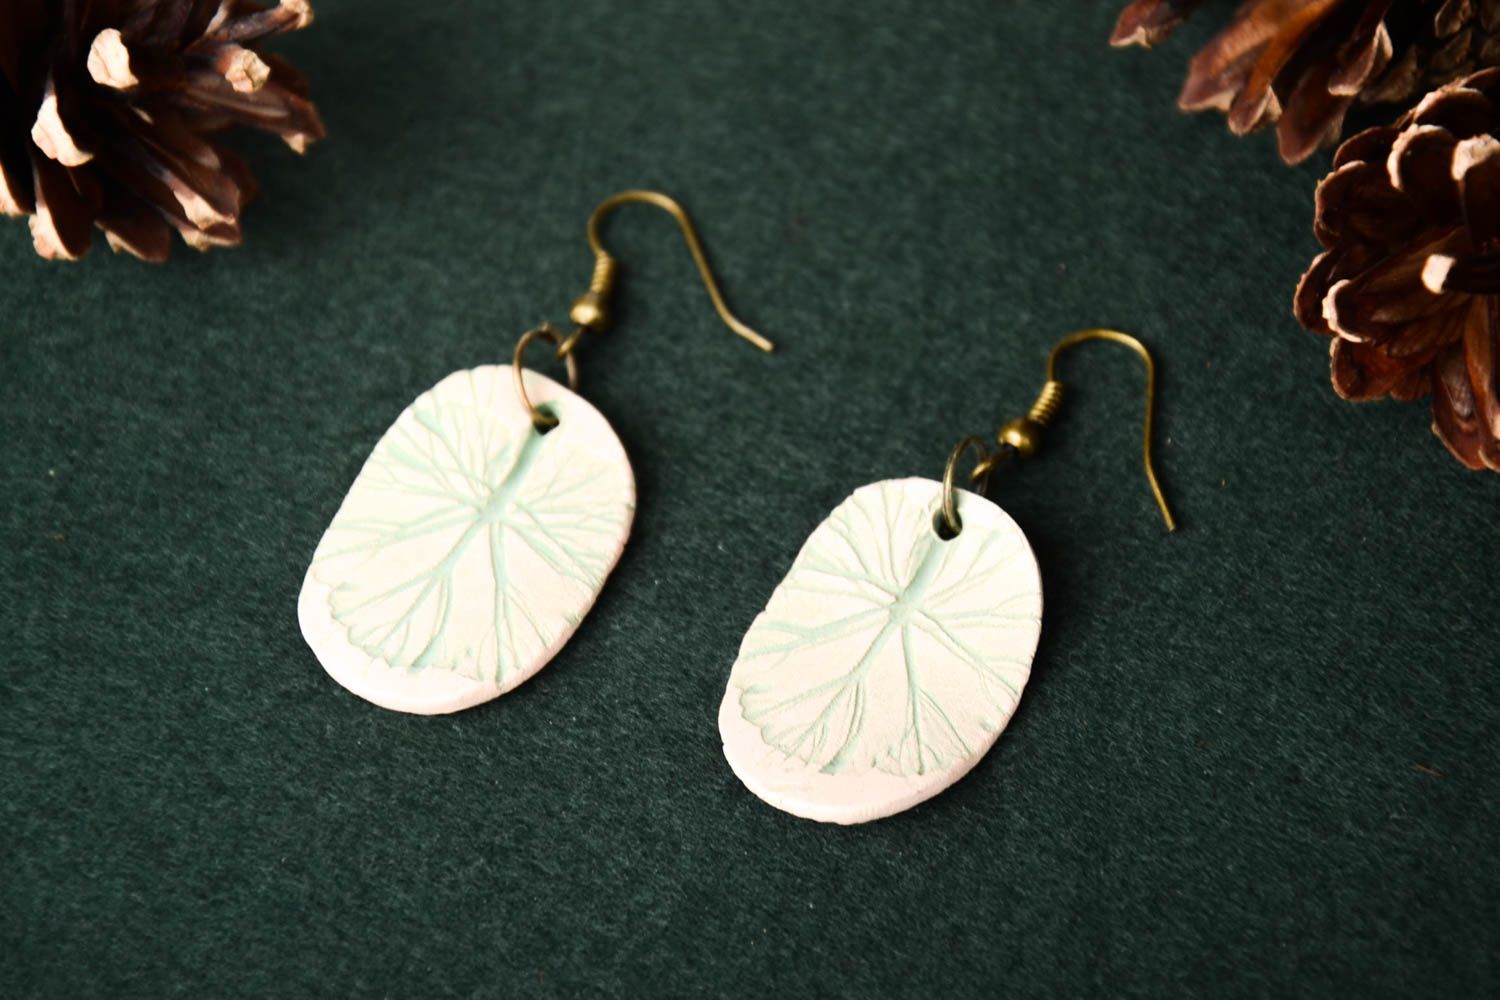 Unusual handmade accessories ceramic leaves earrings design jewelry gift for gir photo 1